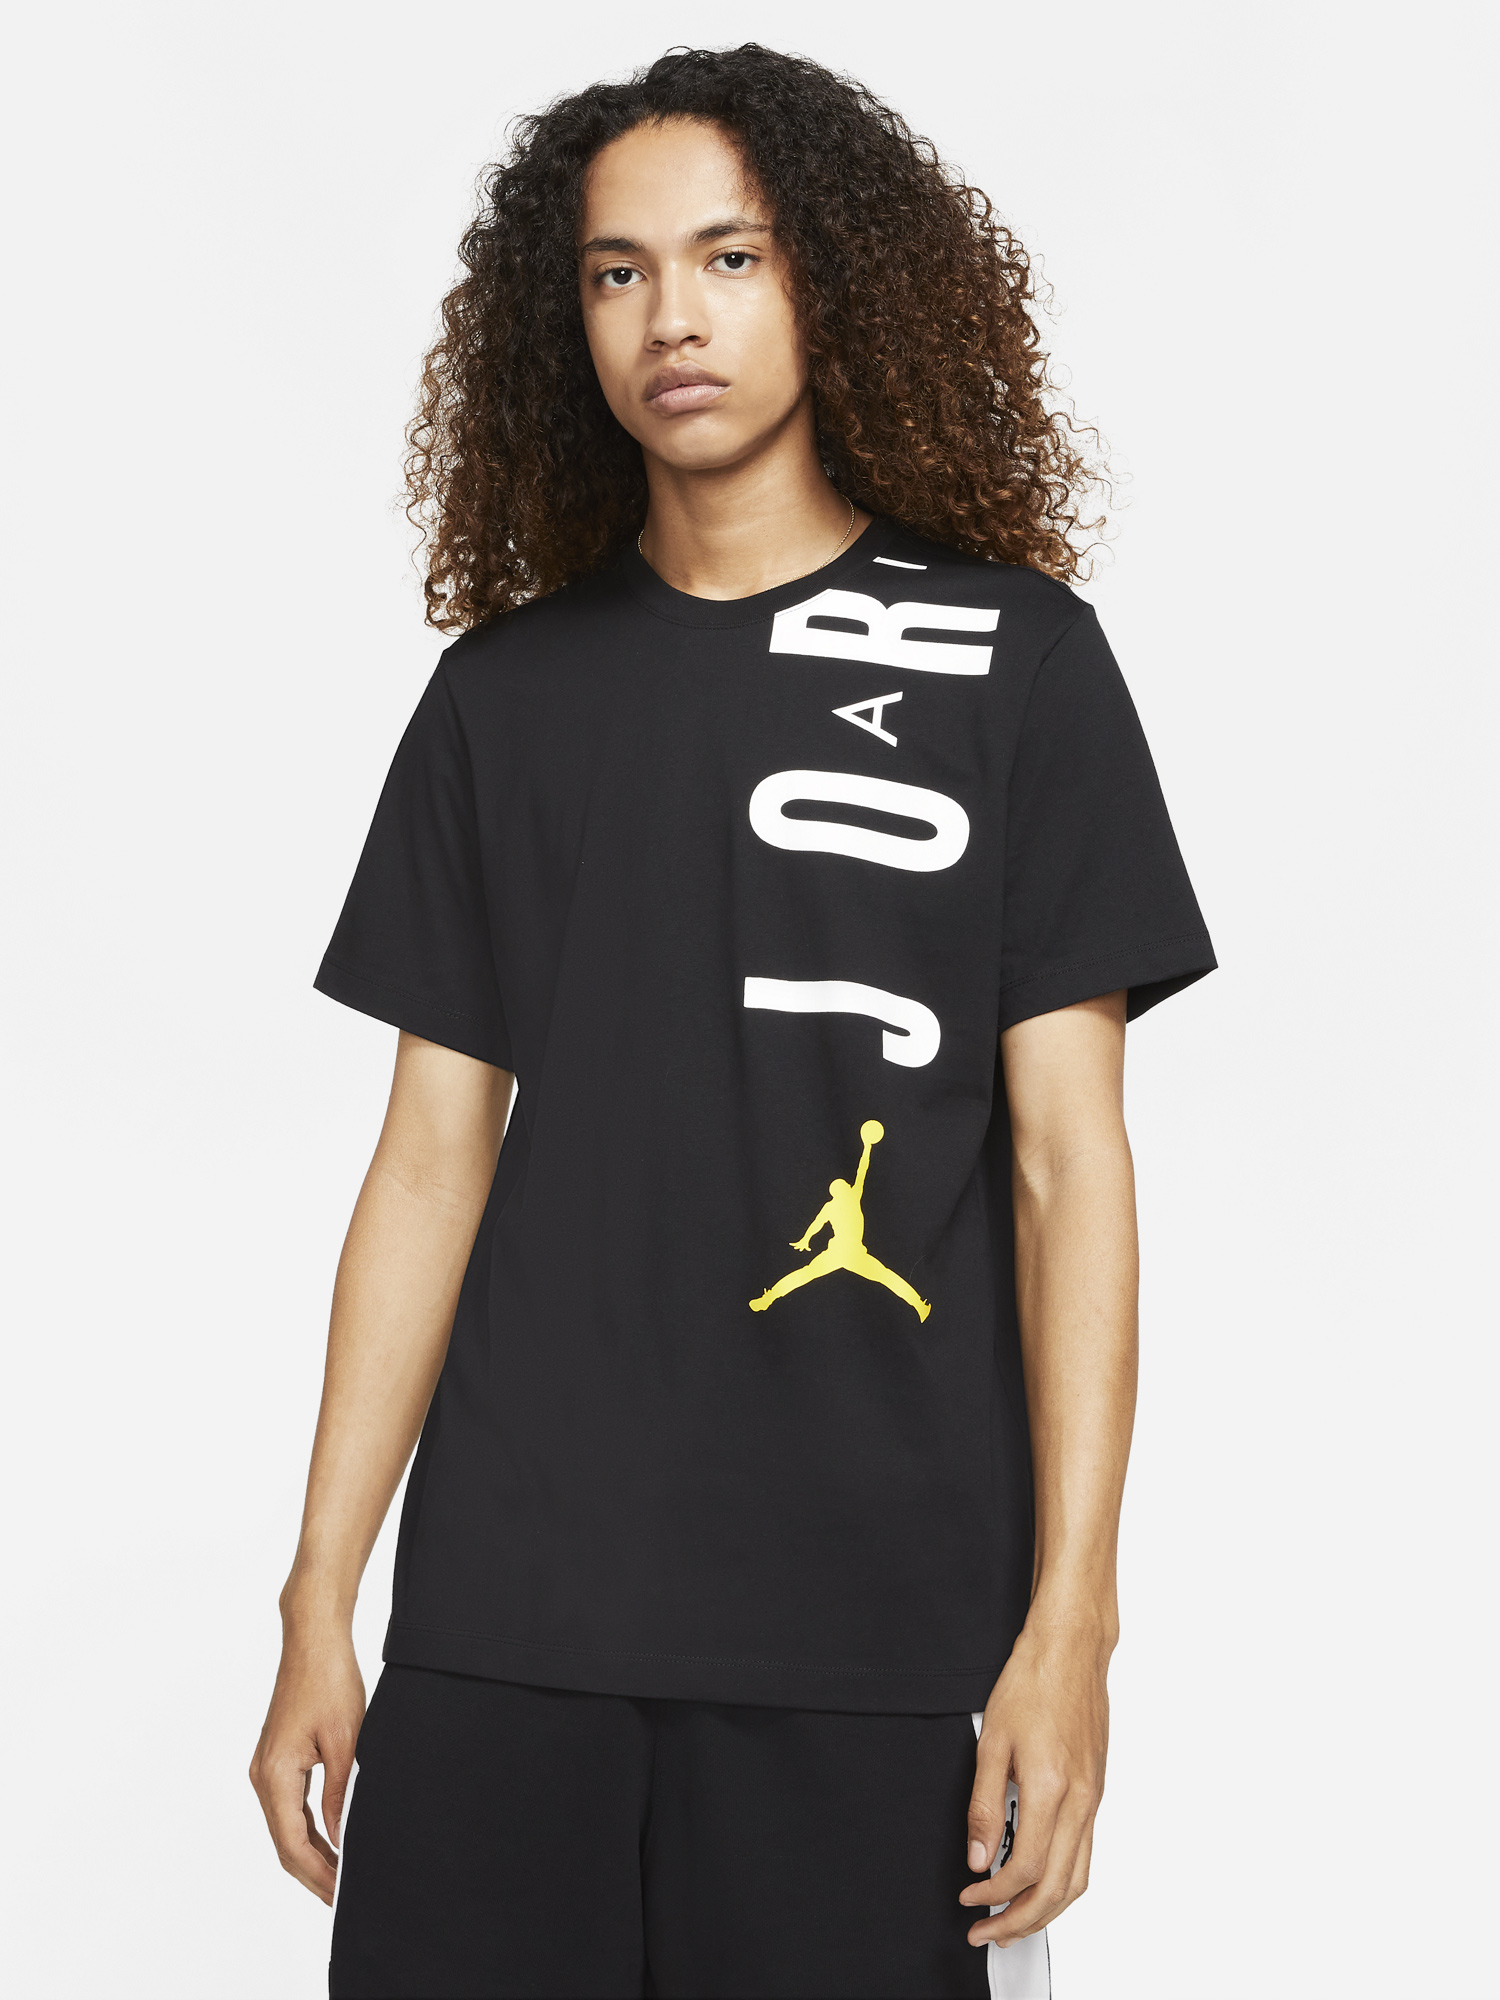 Air Jordan 4 Lightning Shirts to Match